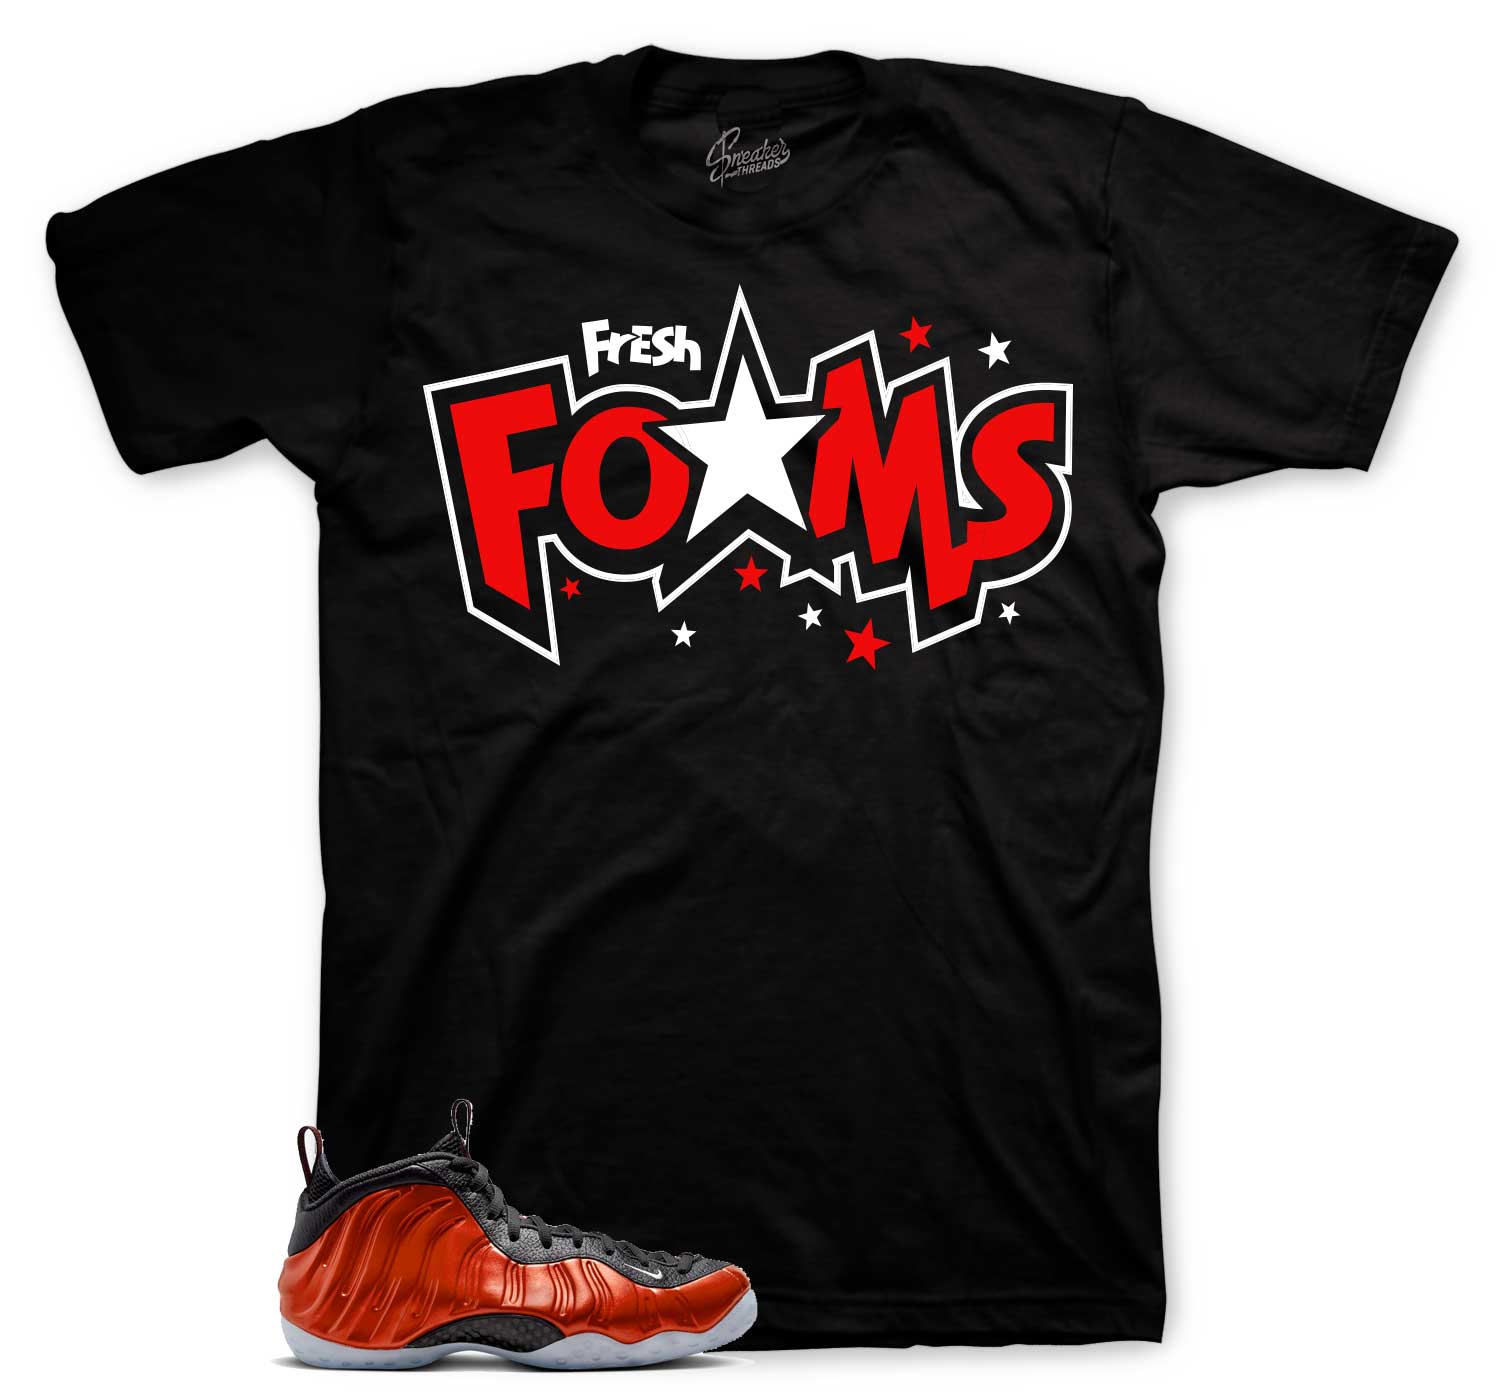 Foamposite Metallic Red Shirt - Fresh Foams - Black